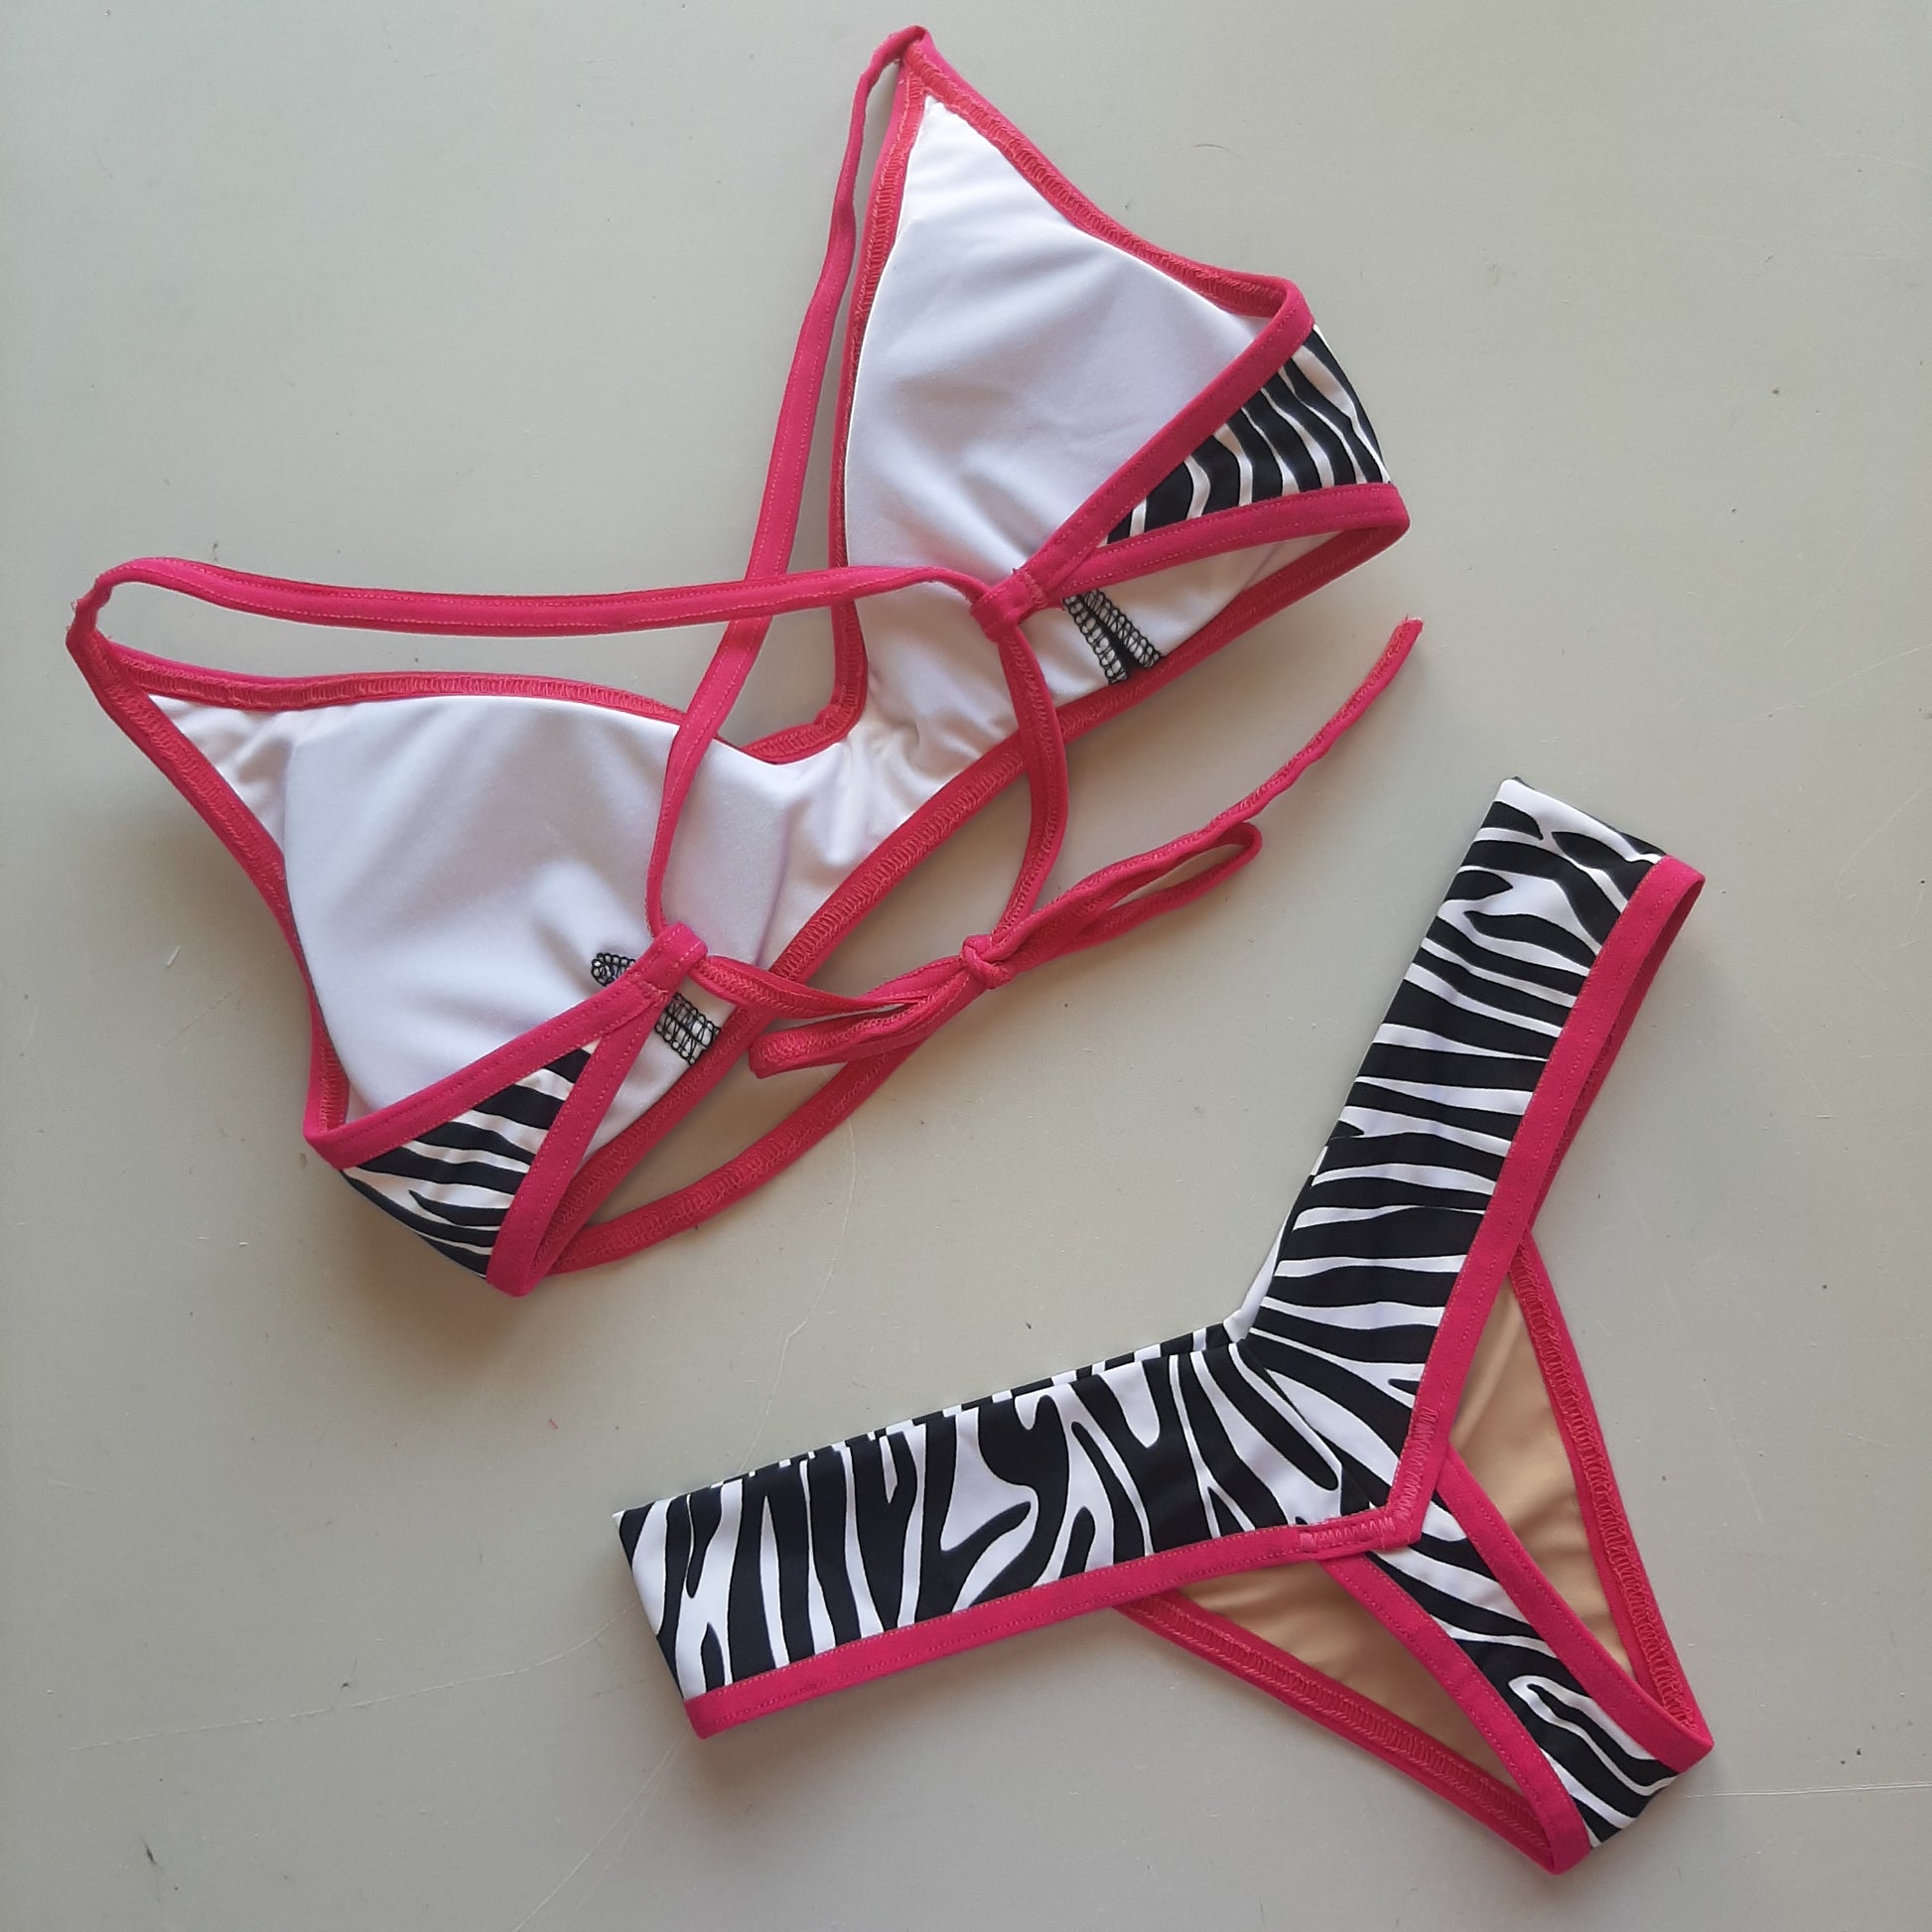 Completo naele miami zebra / fucsia - Flamingo pole wear